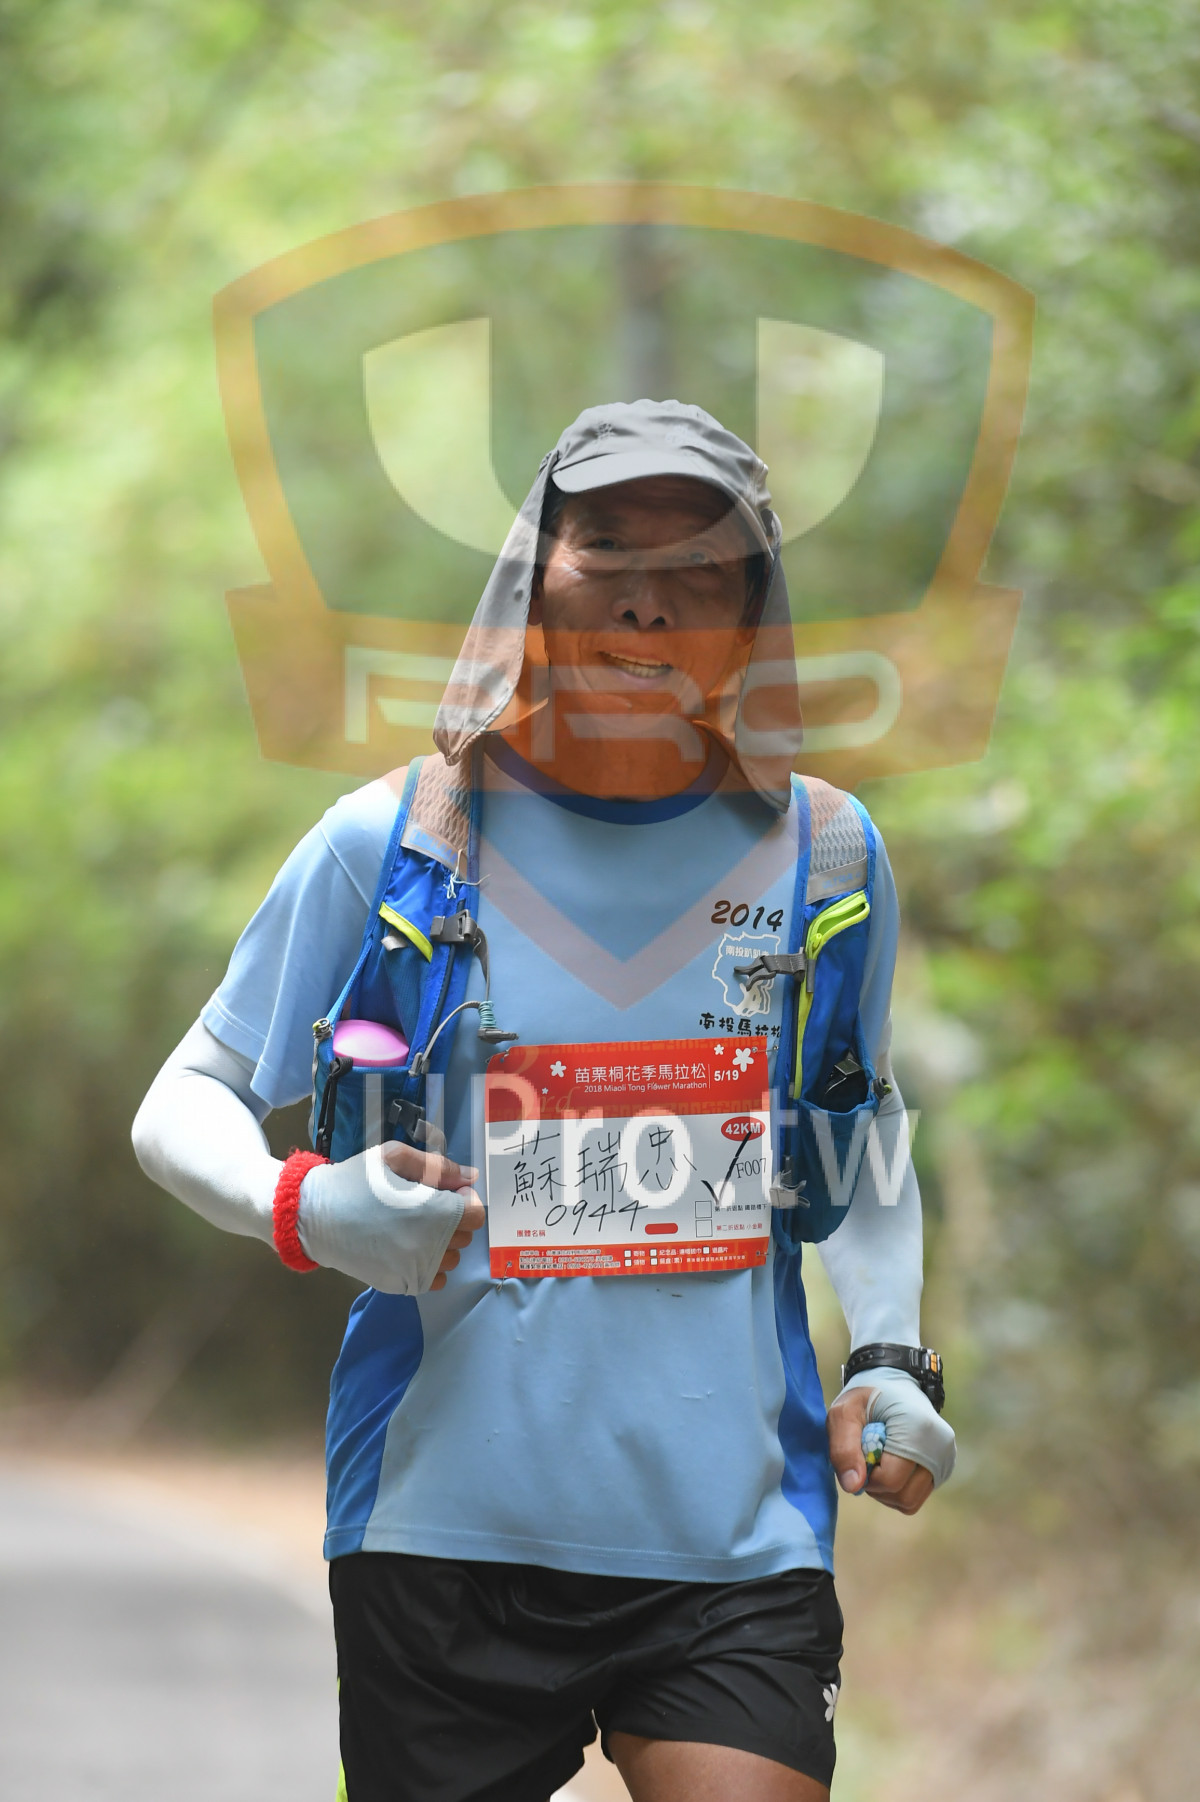 2014,ジ,*5,19,2018 Miaai Tang Flower Marathon,42KM|綠色隧道7|中年人